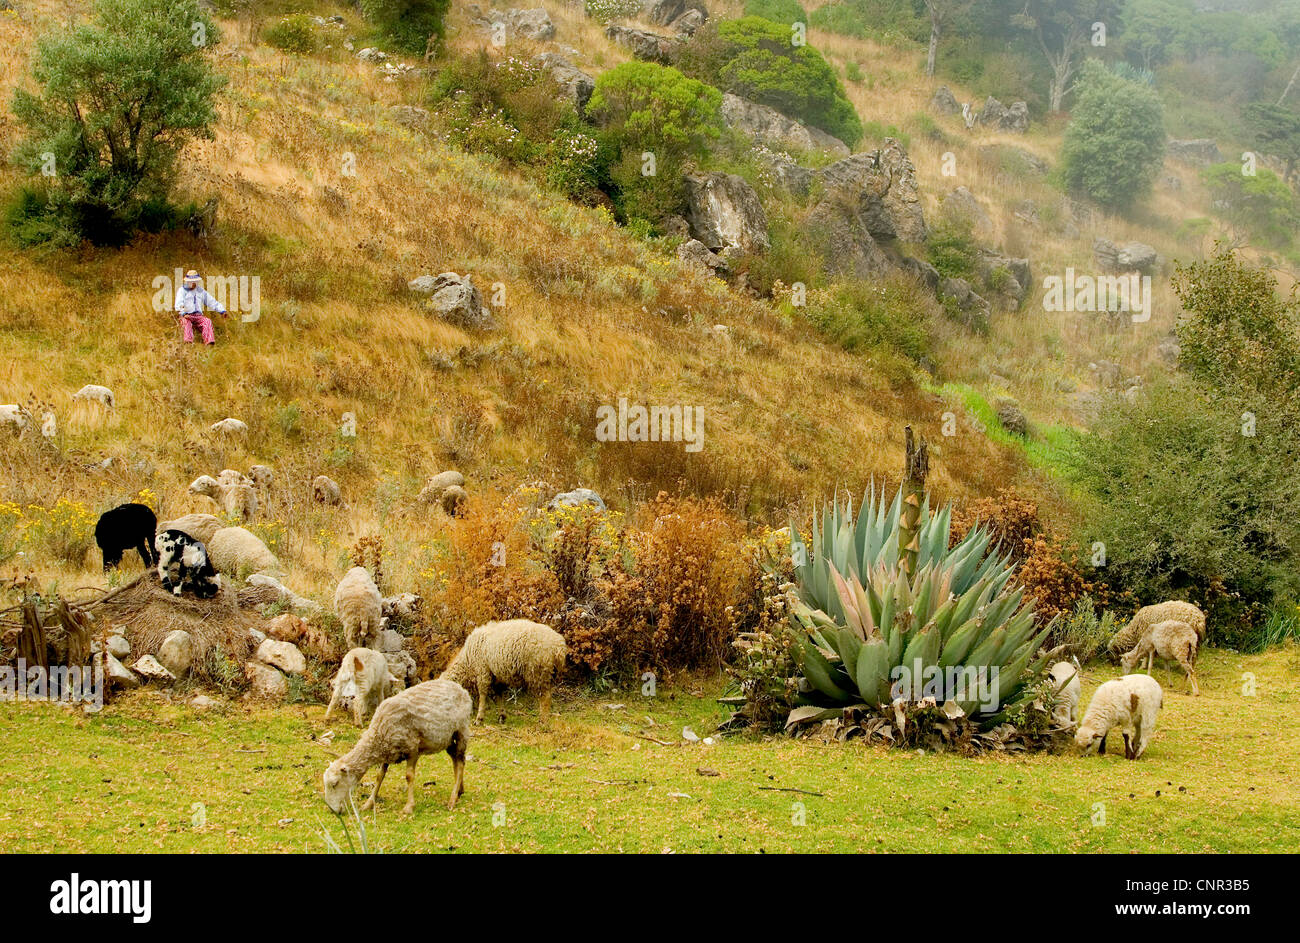 Pastoral scene in the Sierra de los Cuchumatanes highlands near Todos Santos Cuchumatan. Stock Photo